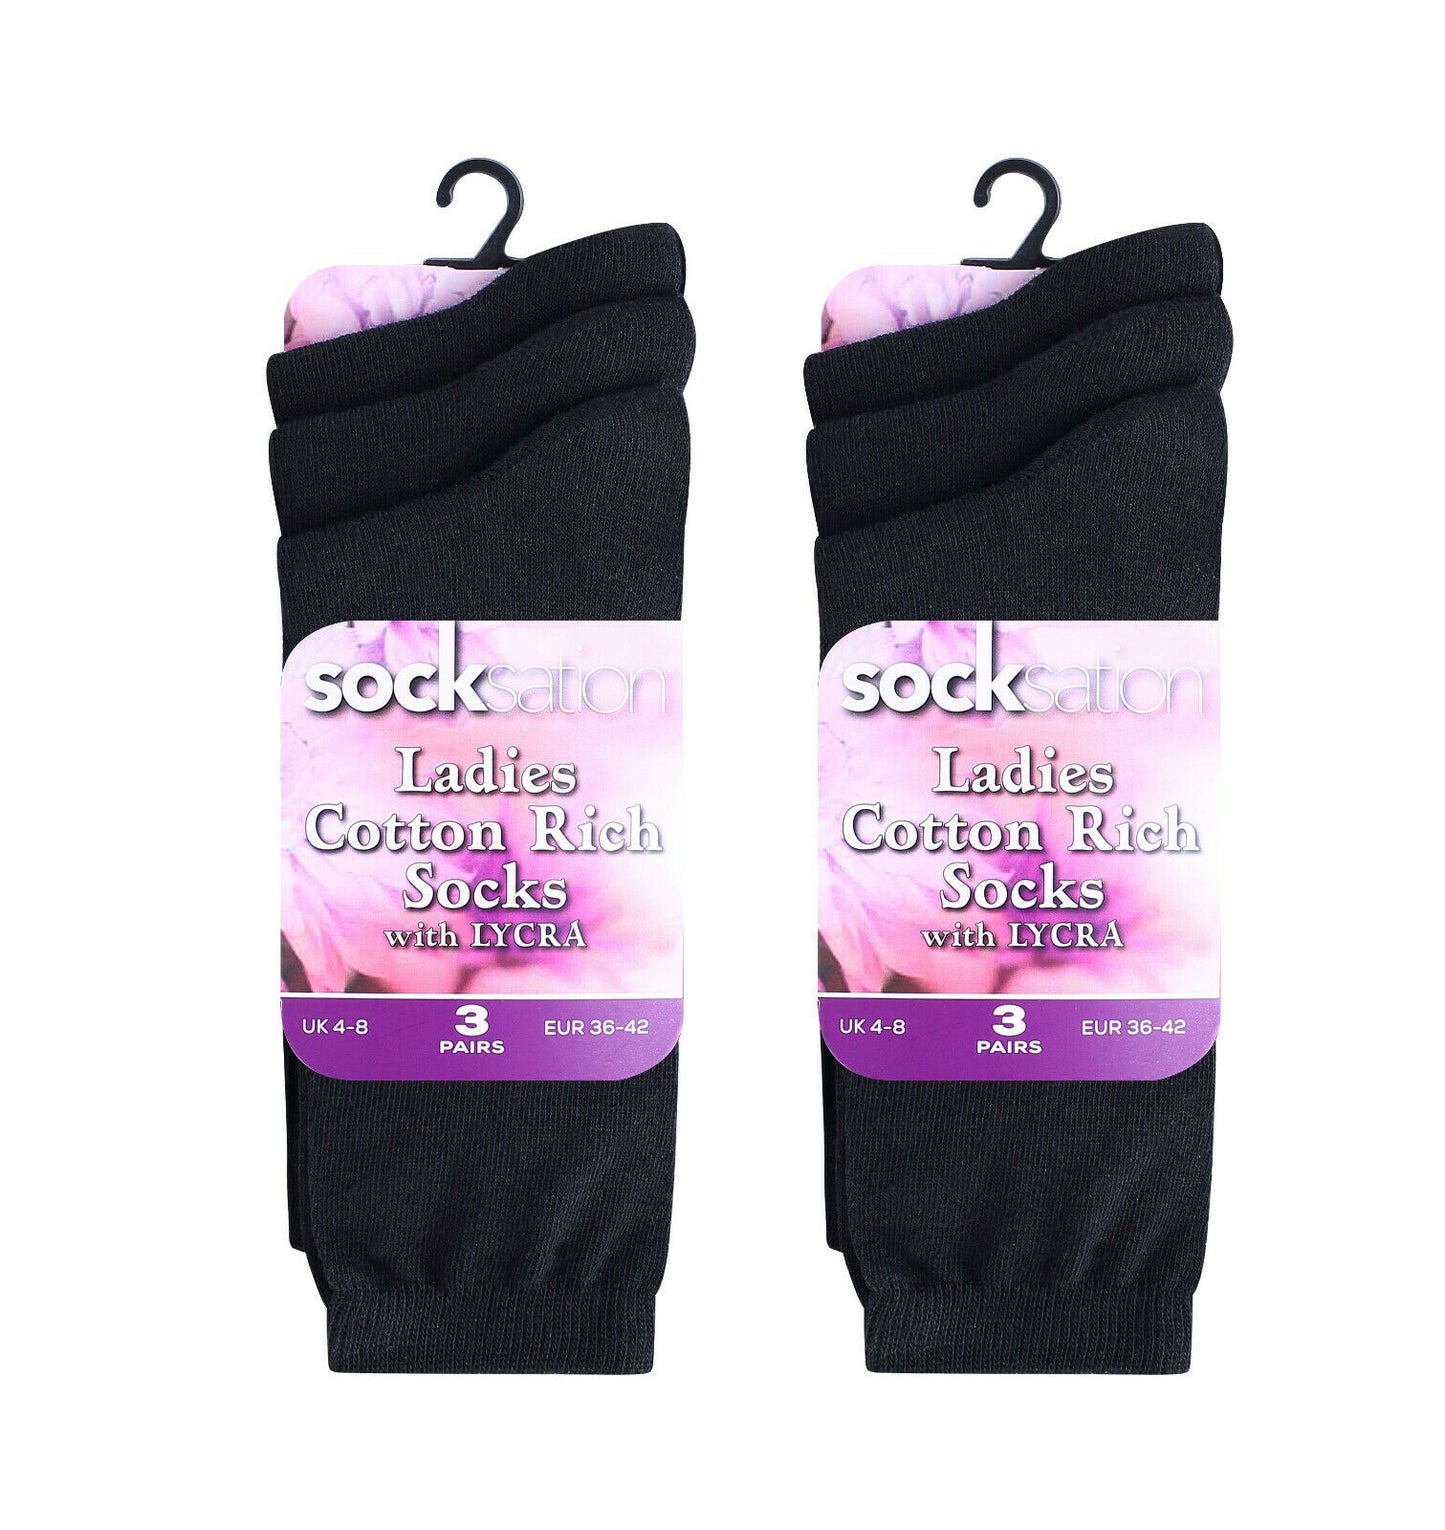 Ladies Black Cotton Socks 6 Pairs.